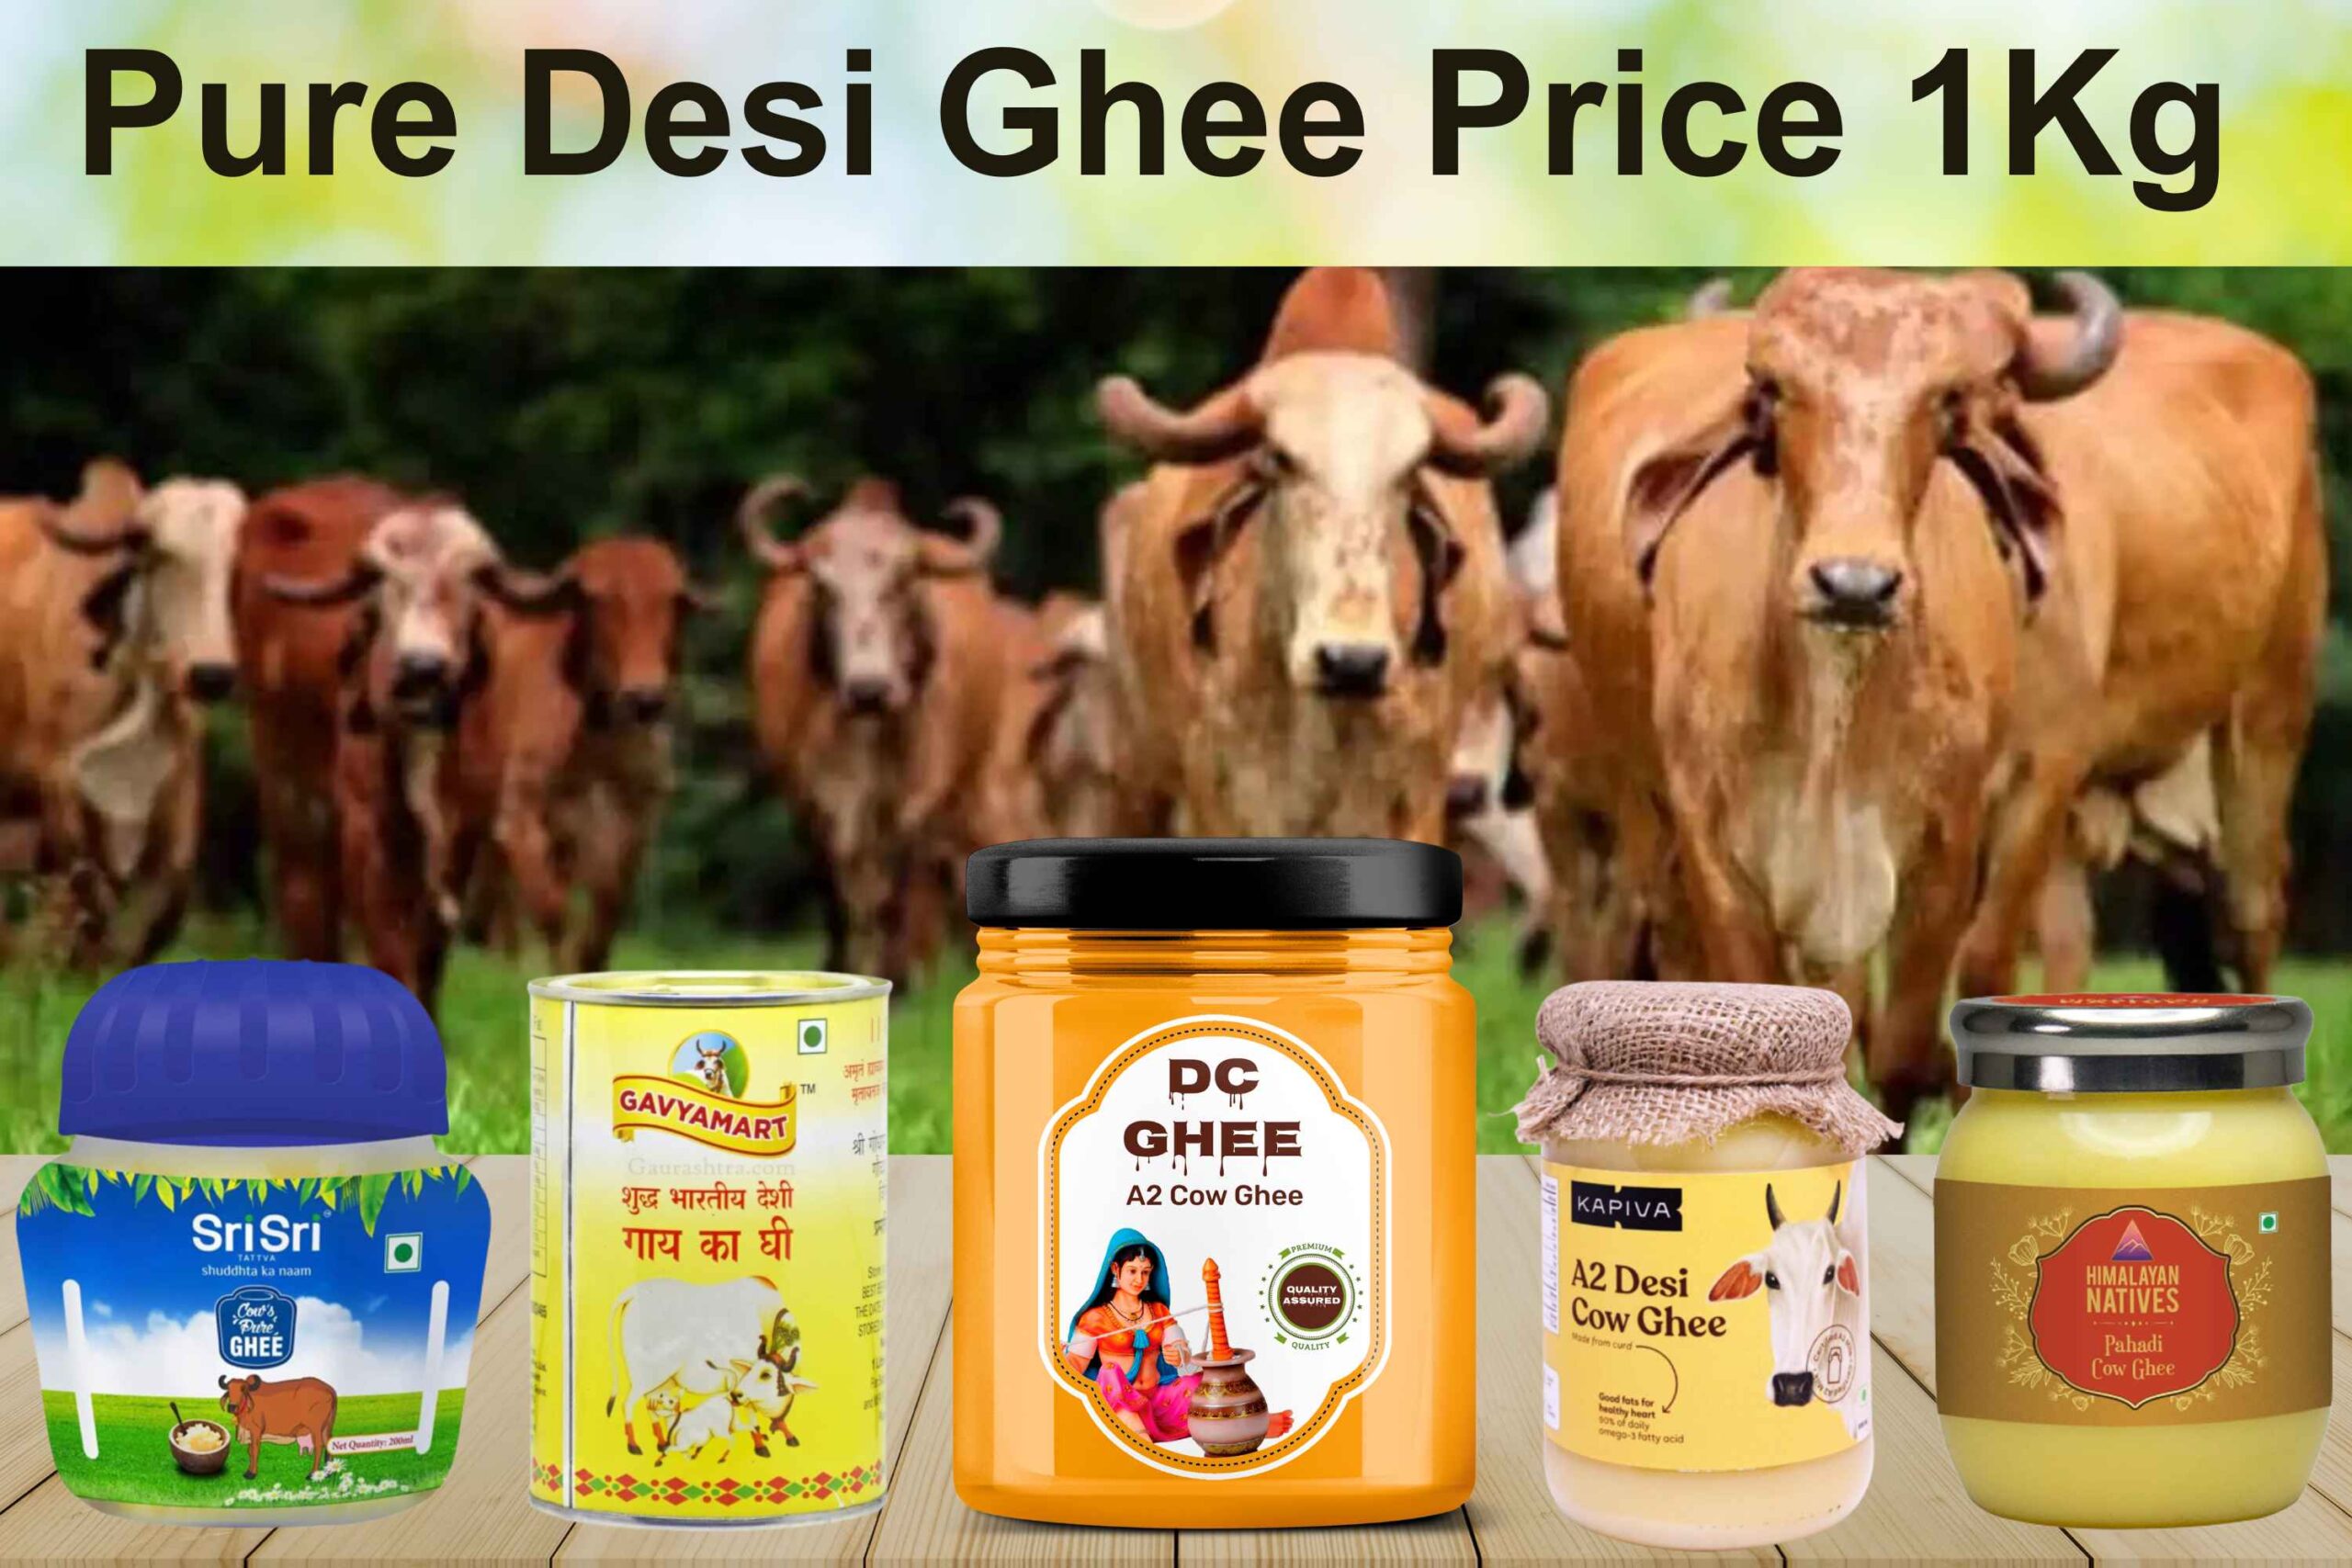 Pure Desi Ghee Price 1Kg